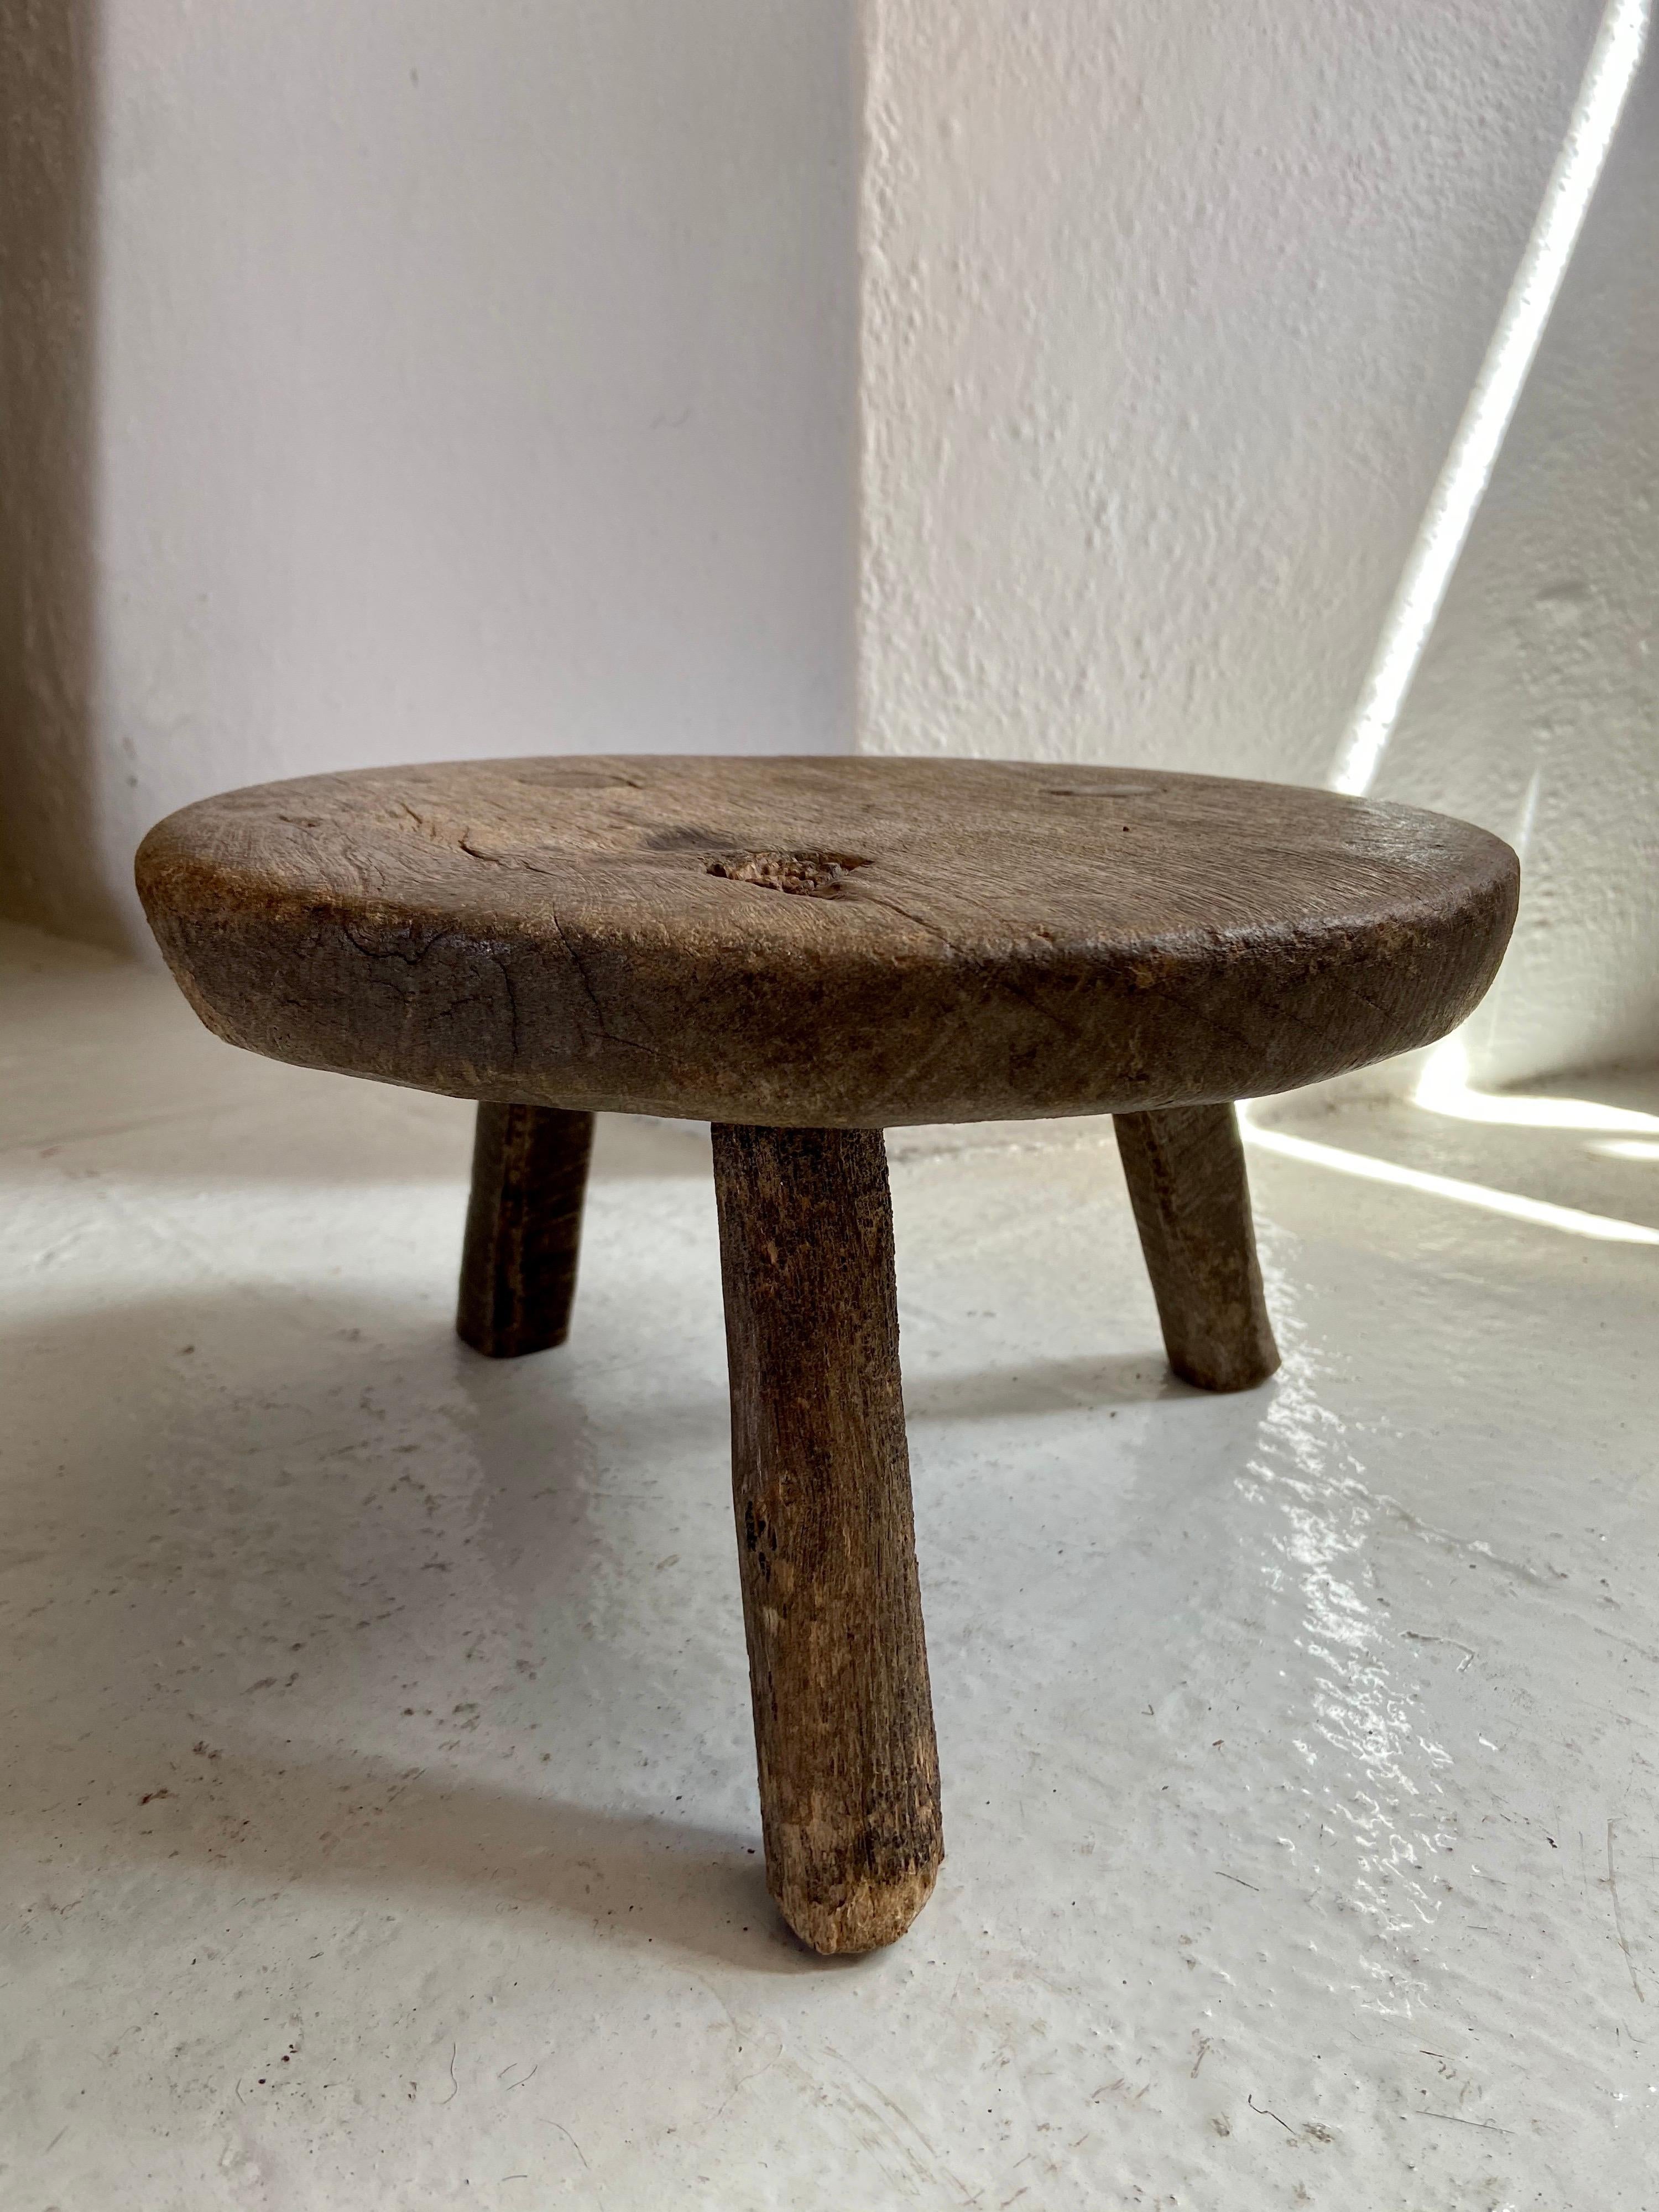 Mesquite mini stool from Guanajuato, Mexico.